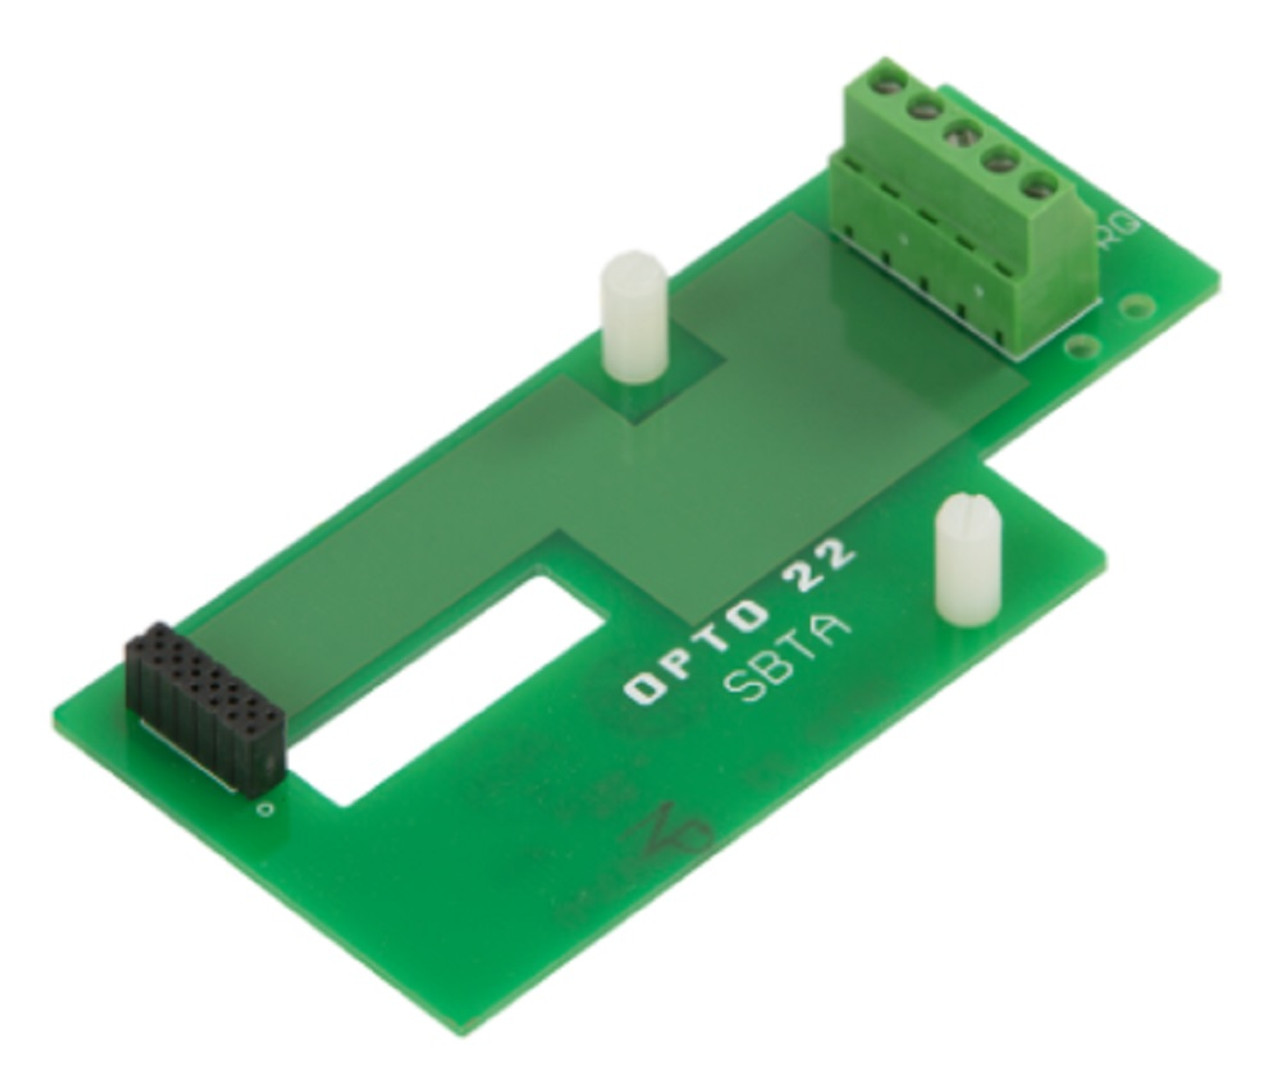 Opto 22 SBTA Single Brick Terminal Adapter [New]